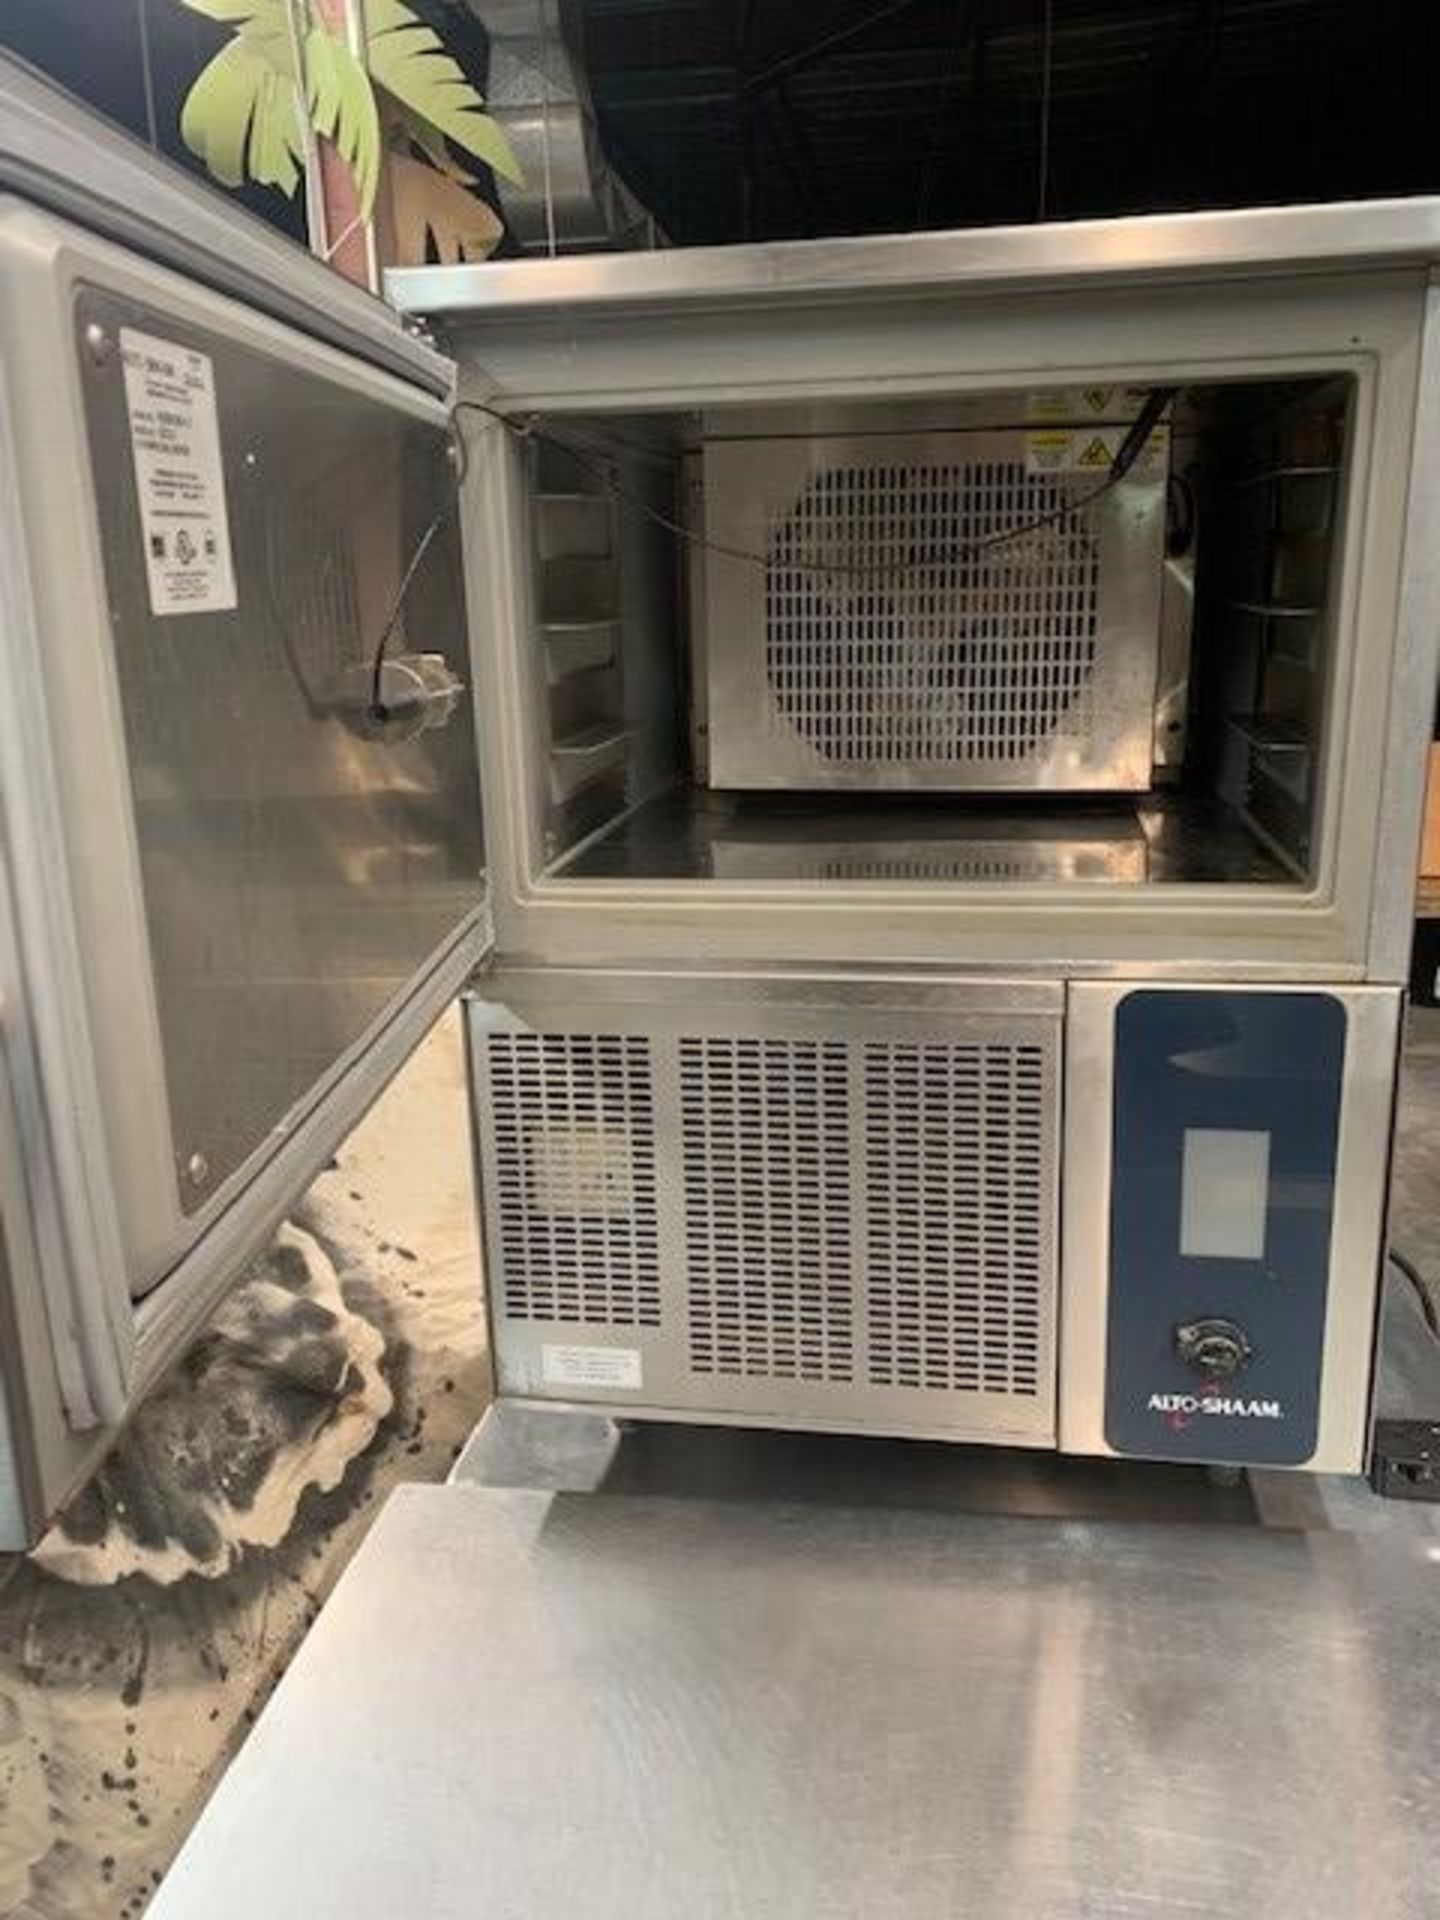 Alto Shaam rapid chill freezer / ref - Model# W286536-1-1 - Blast freezer - Image 2 of 4